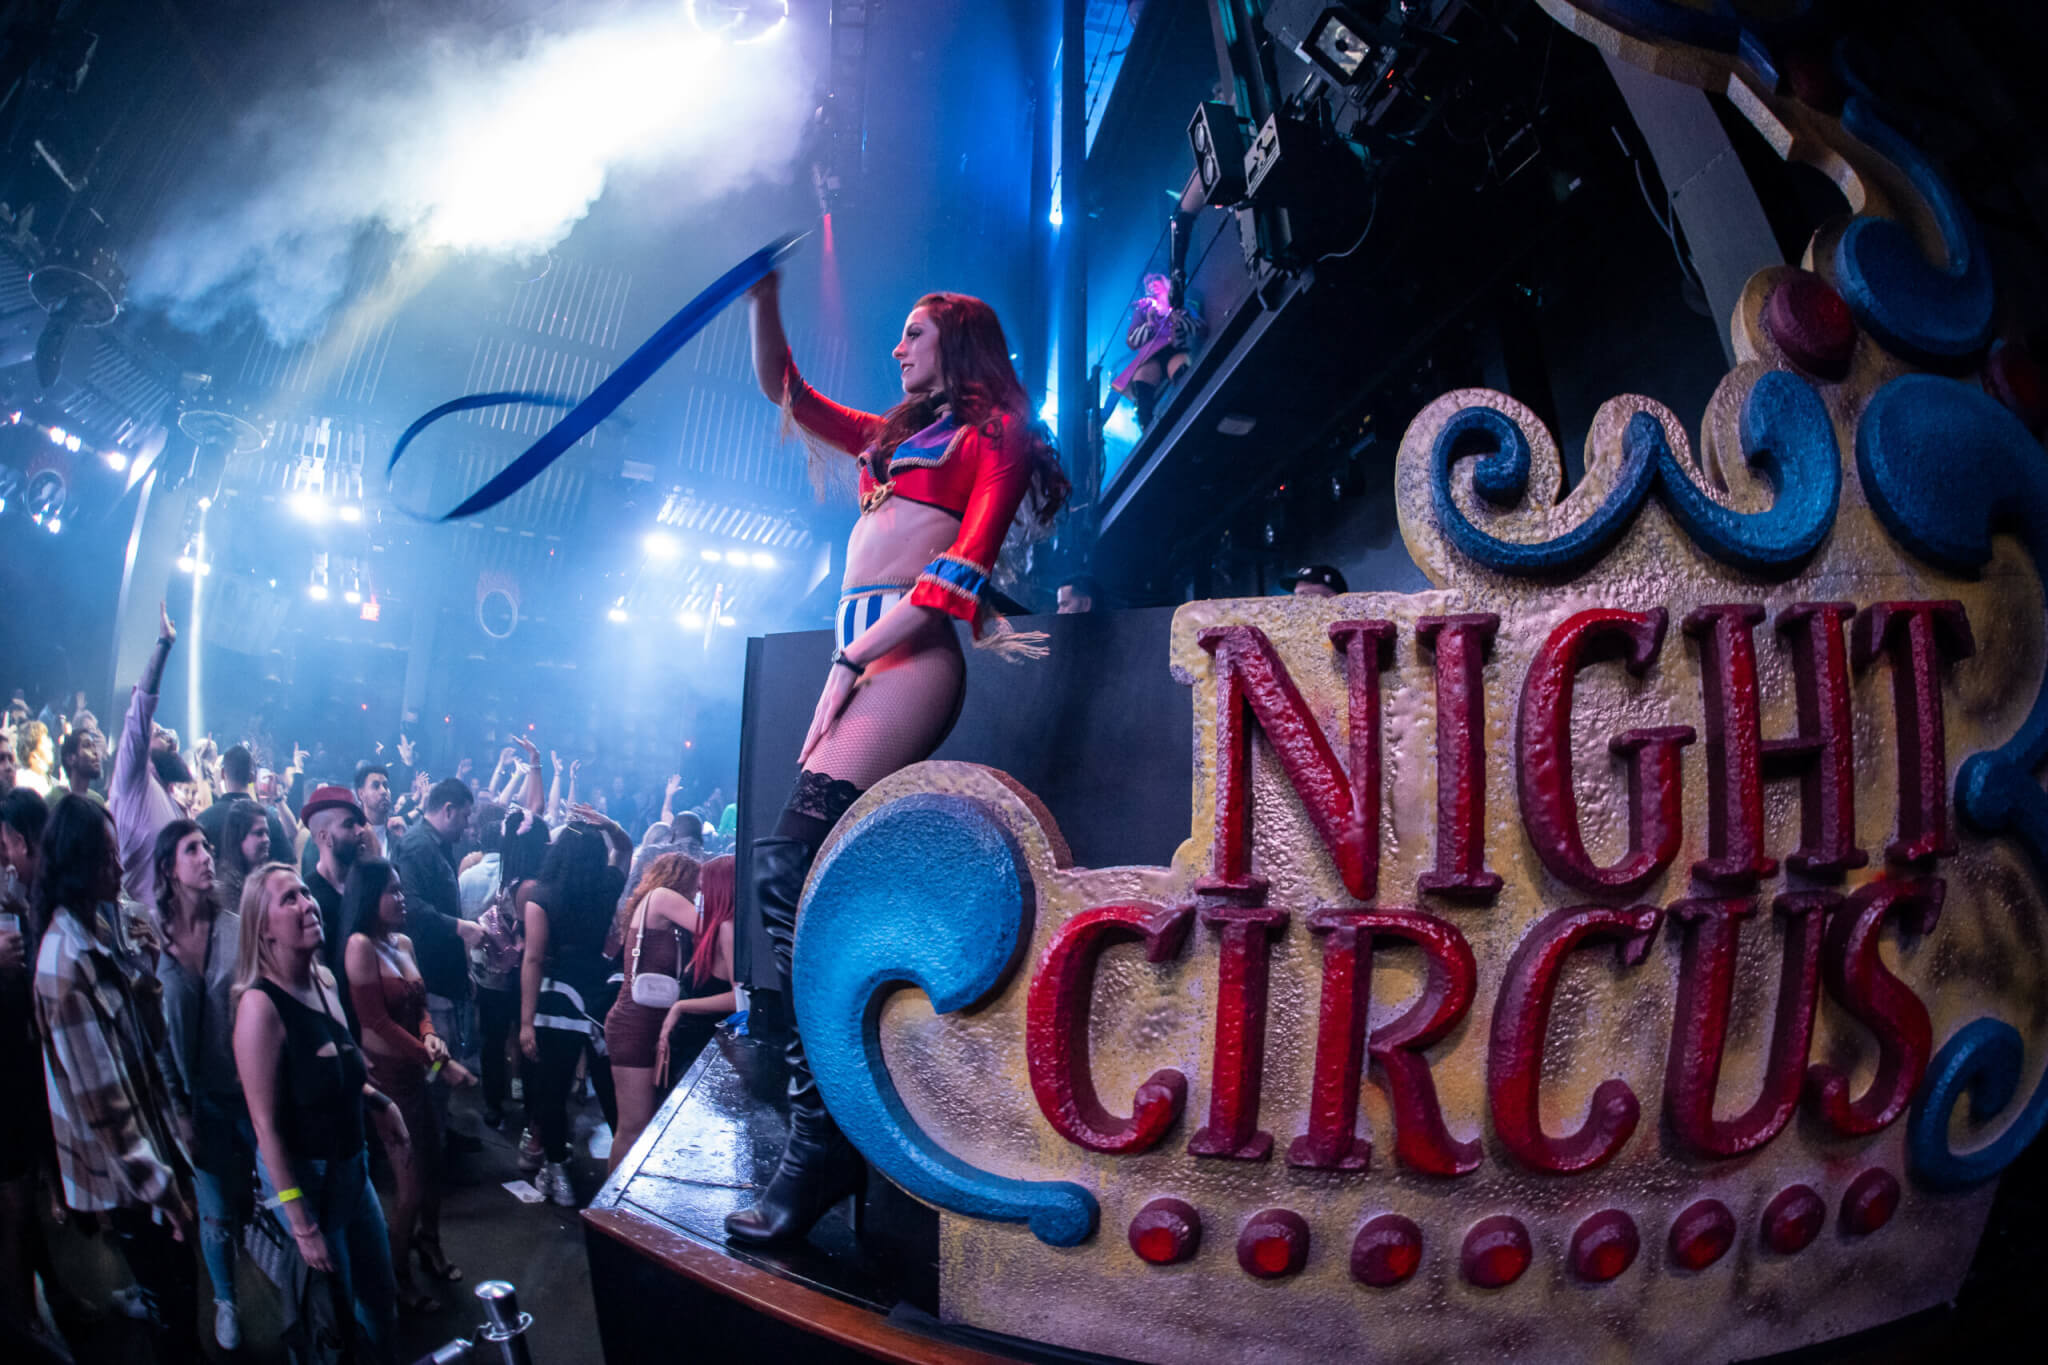 Marquee nightclub night circus